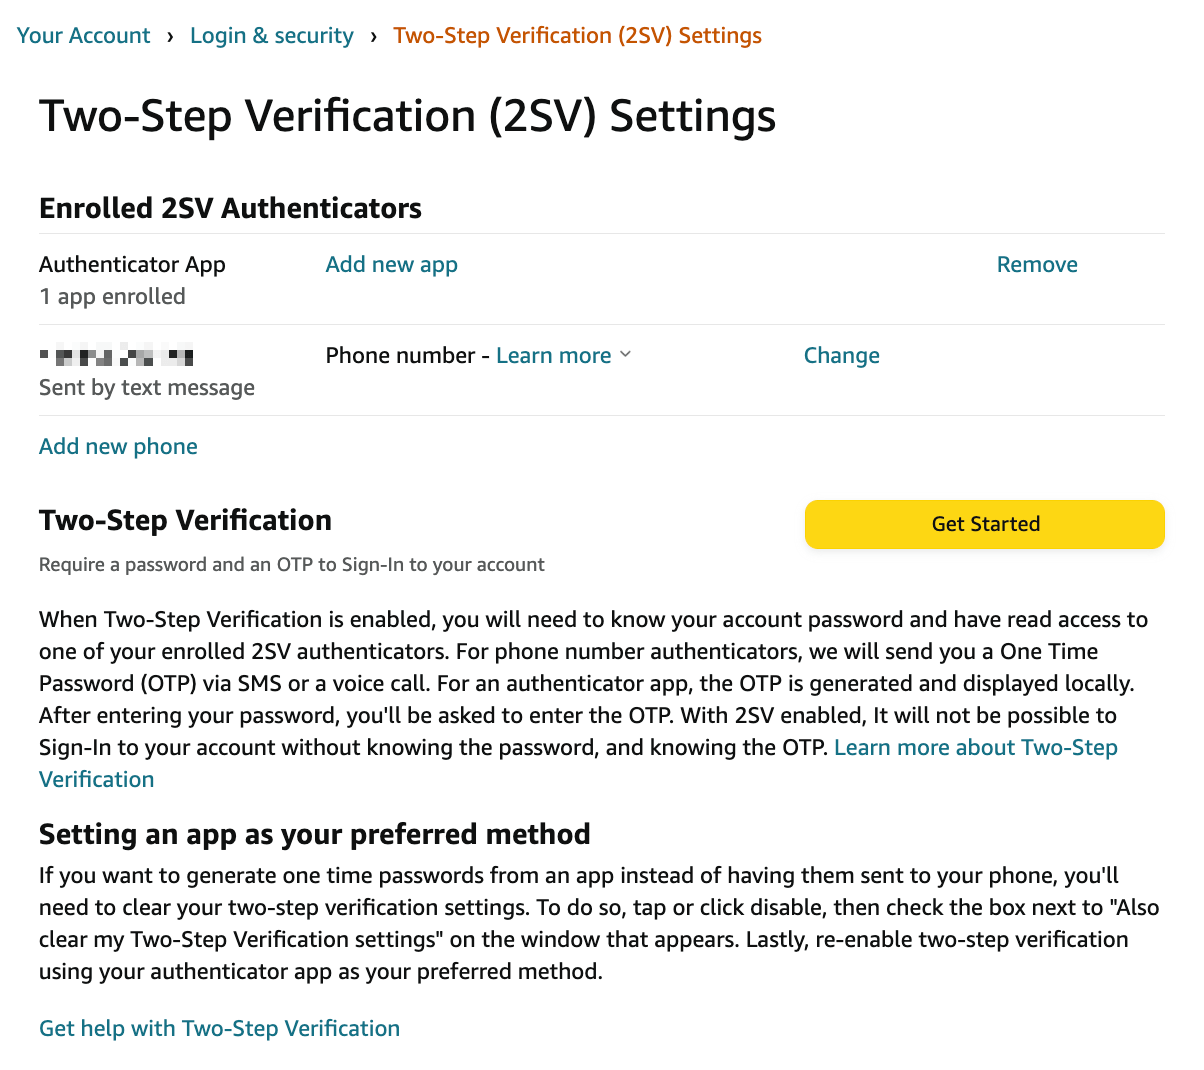 Amazon’s 2SV authentication options.